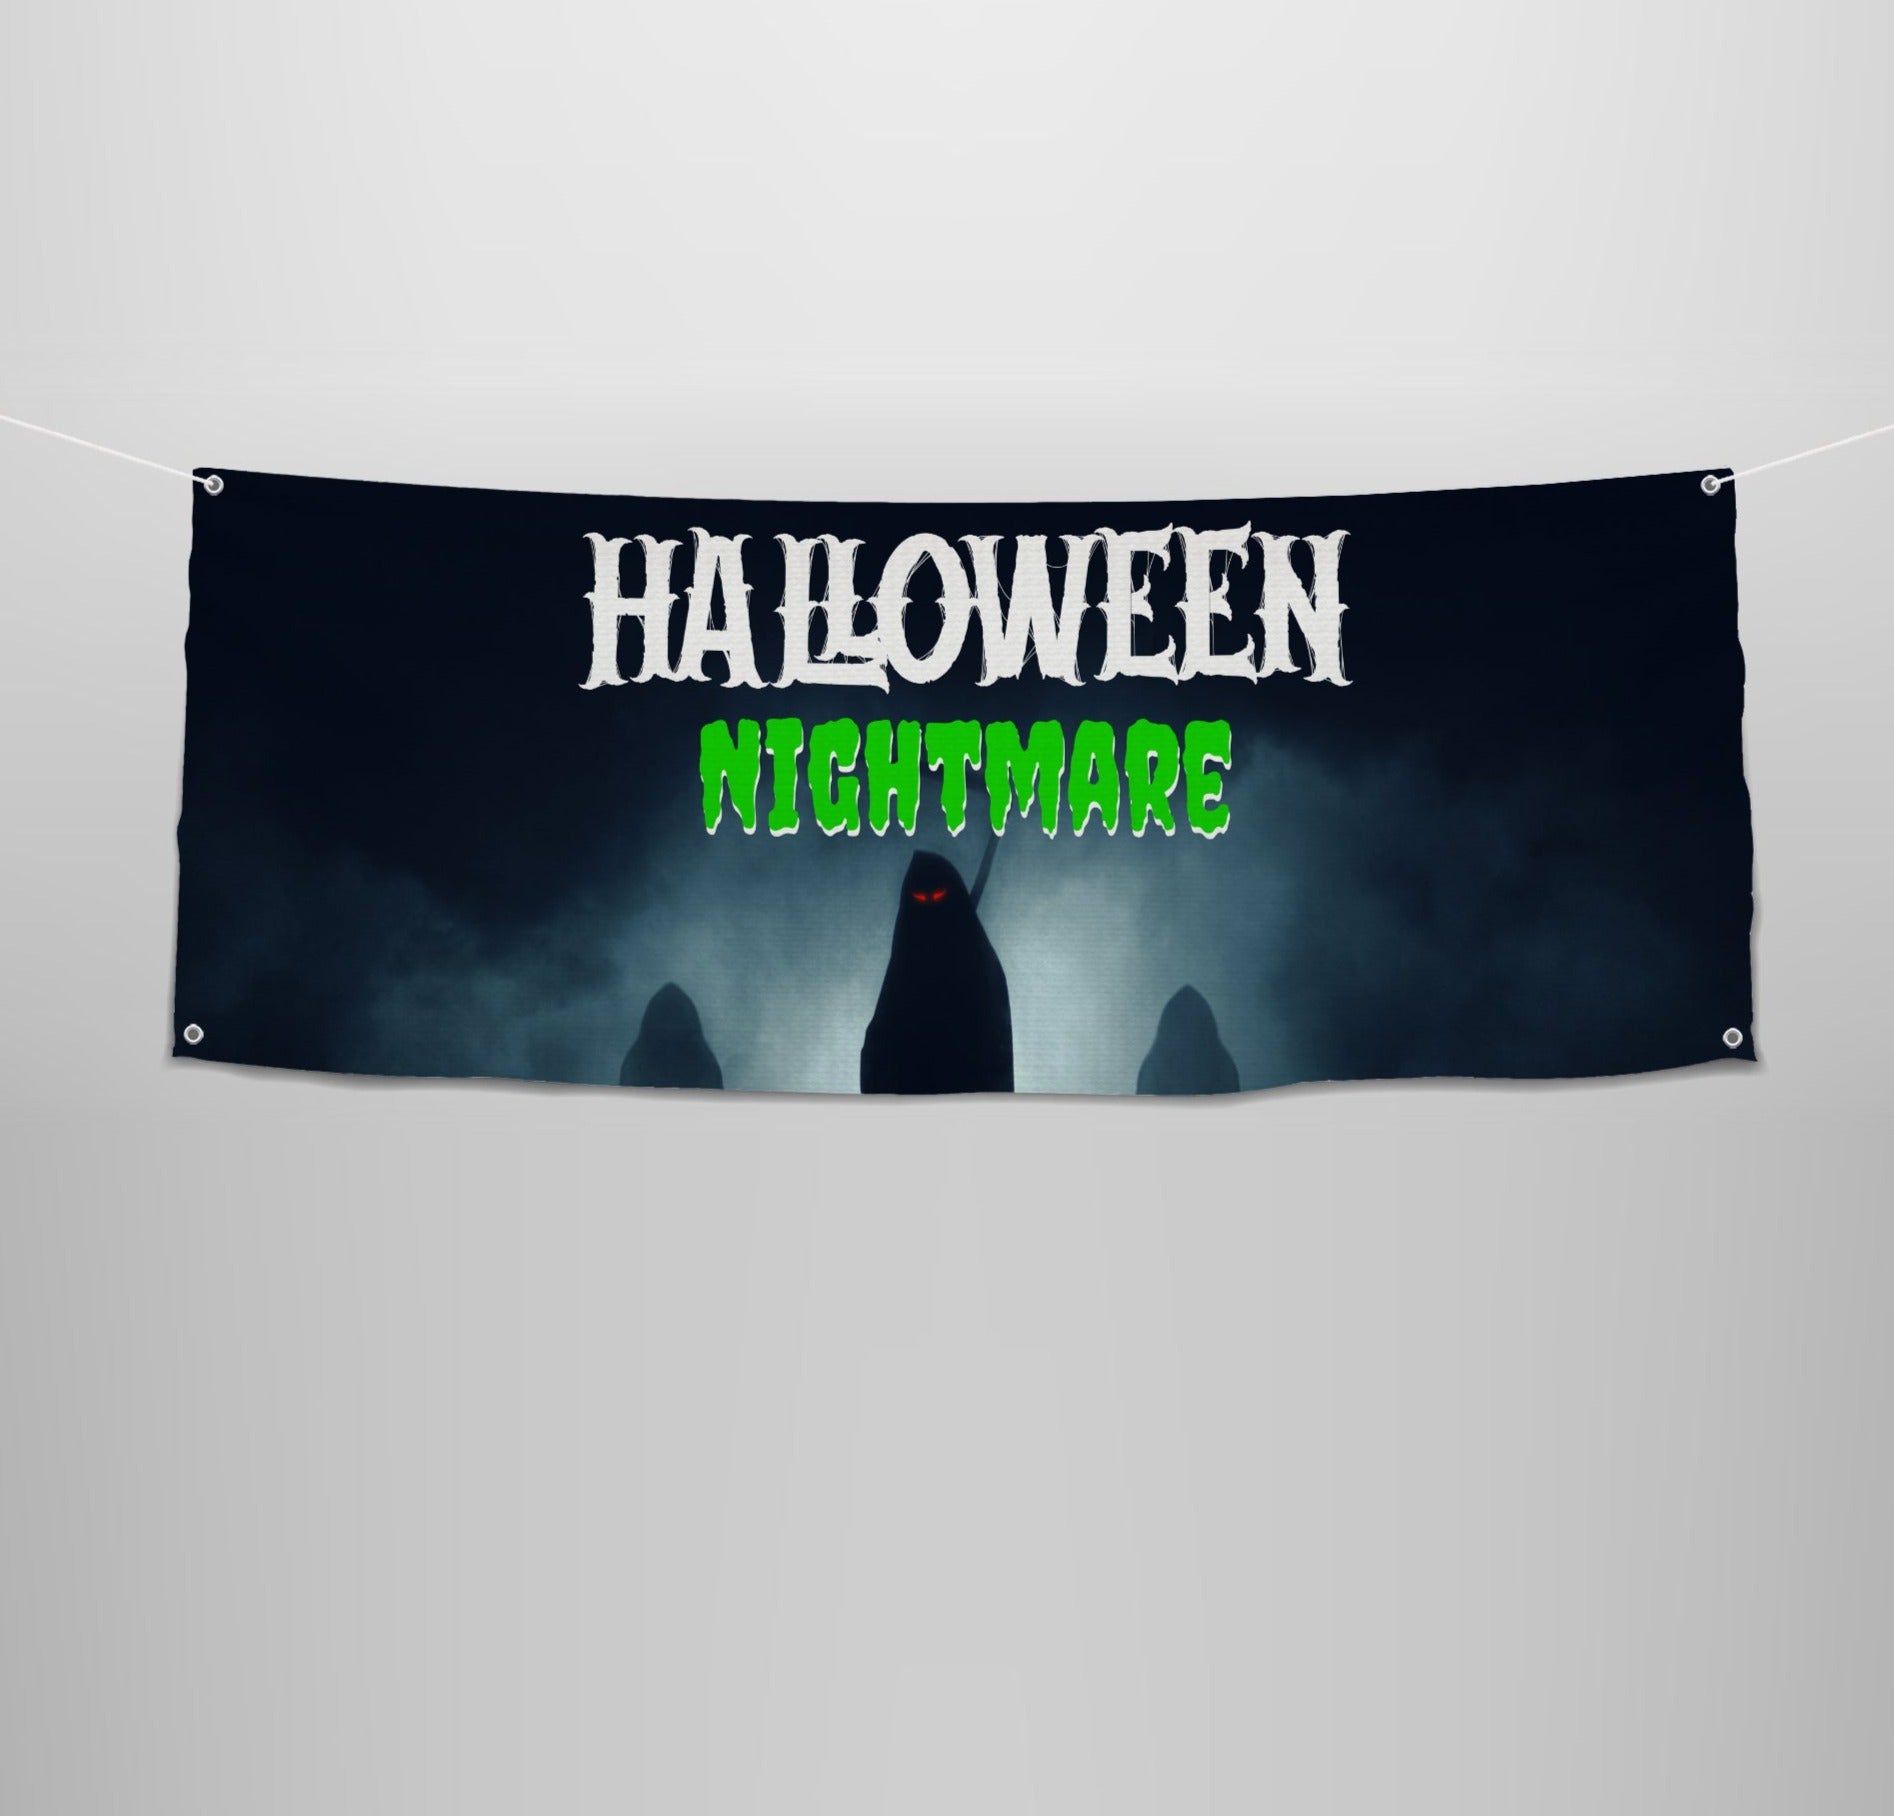 Halloween Nightmare Large Banner - Eerie Design, Easy Installation, Multiple Size Options